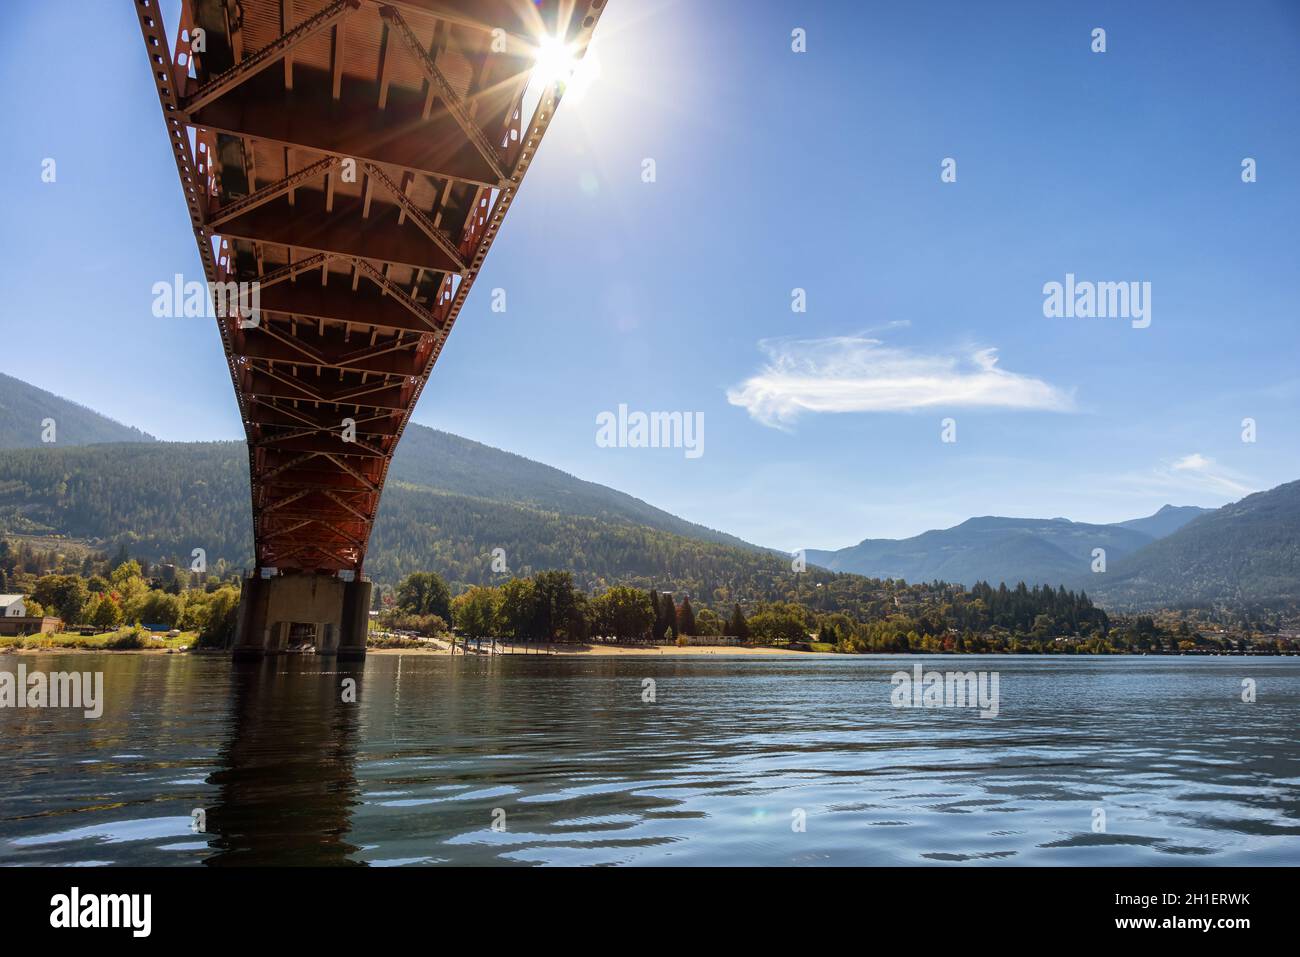 Big Orange Bridge over Kootenay River with Touristic Town Stock Photo